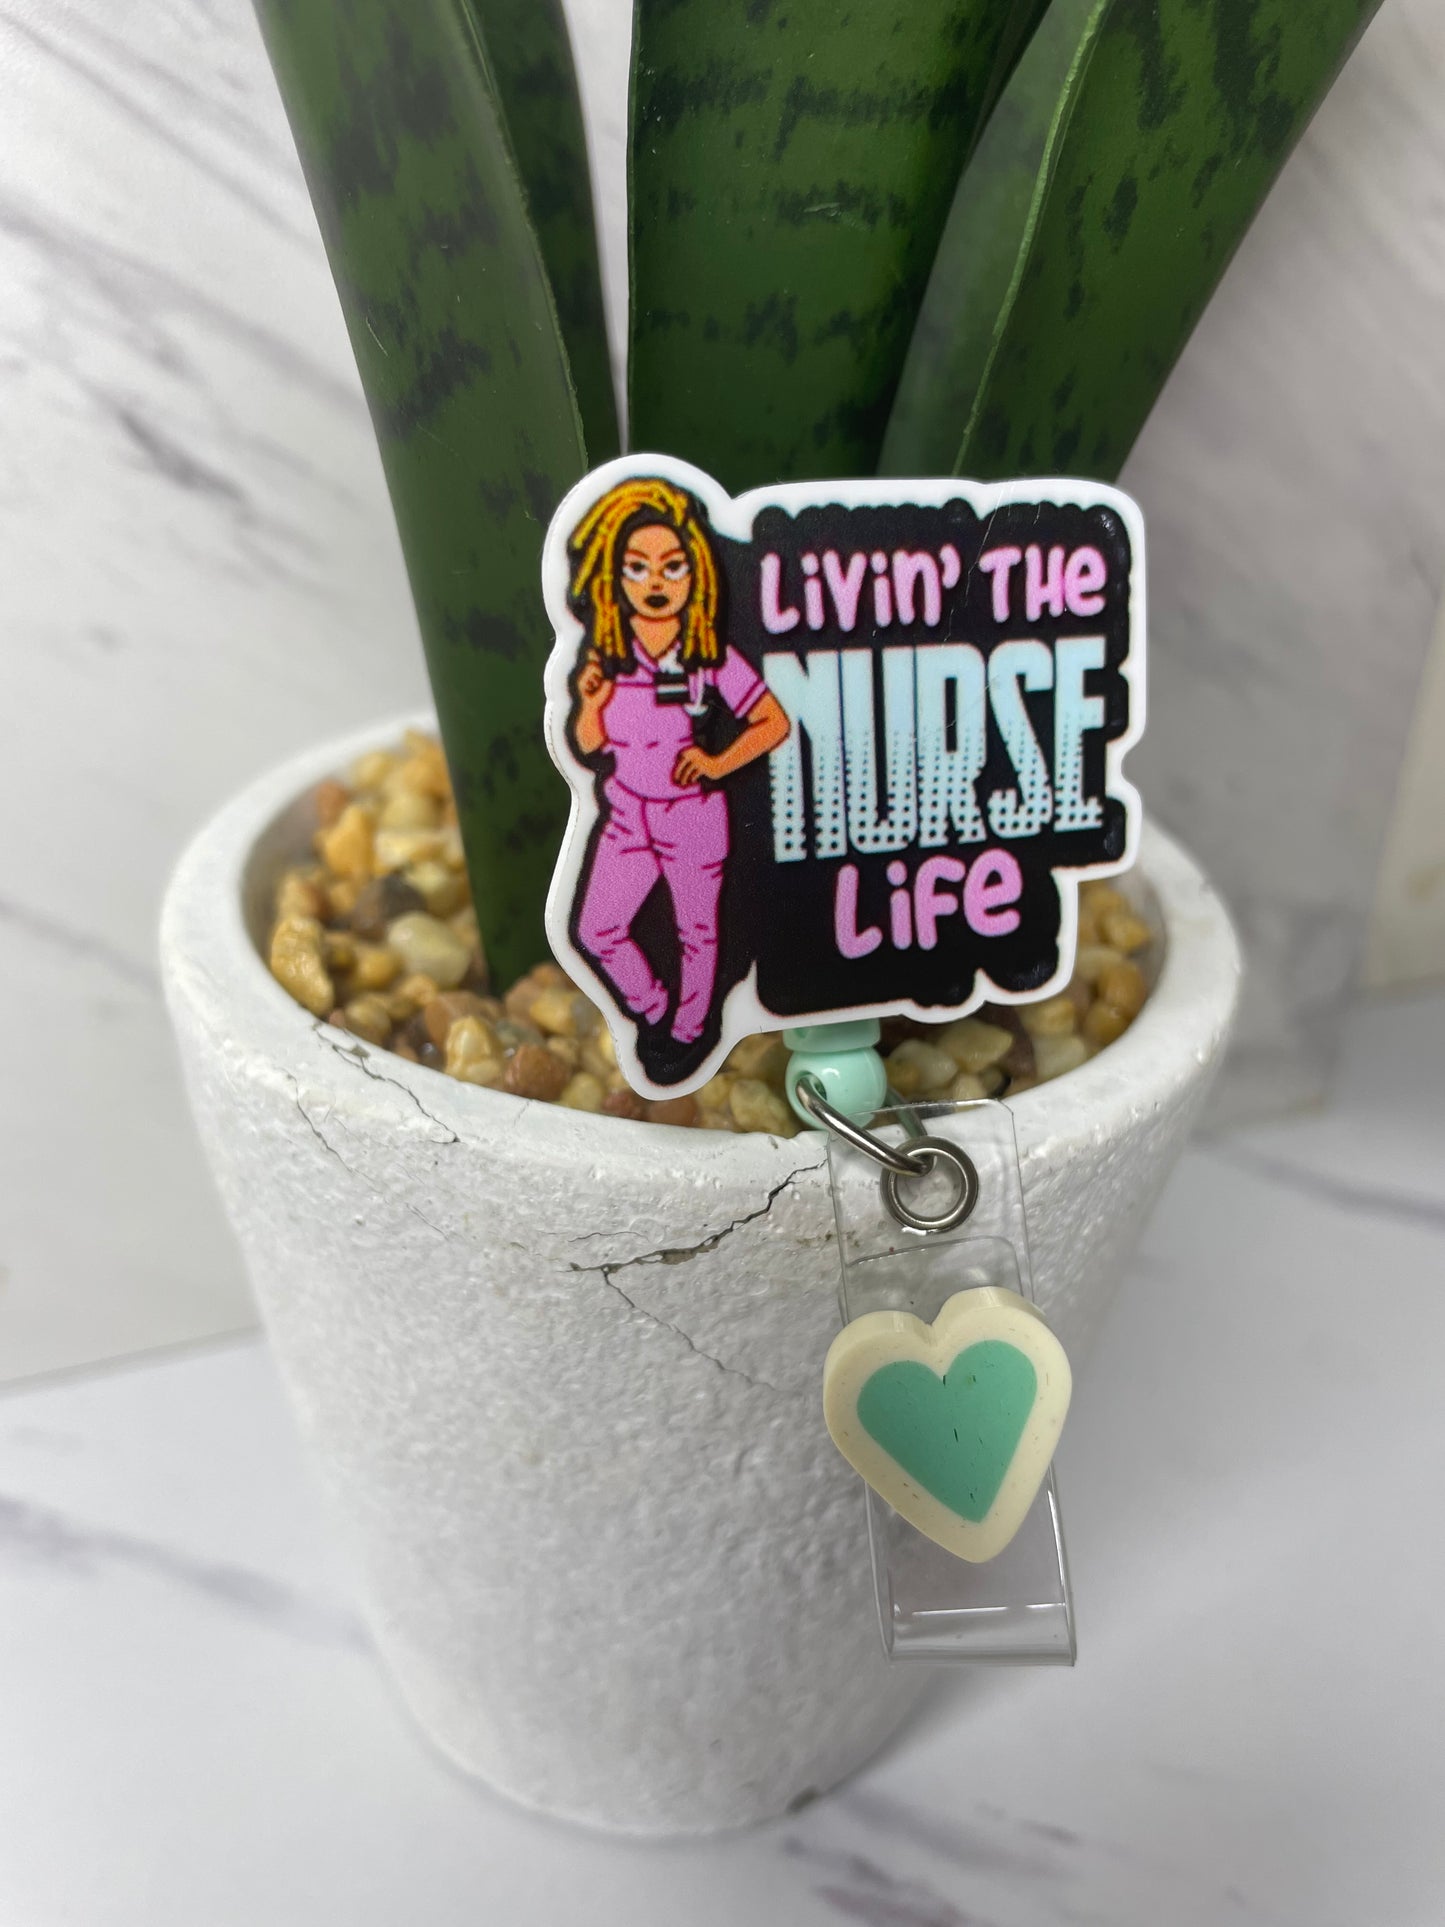 Living the nurse life